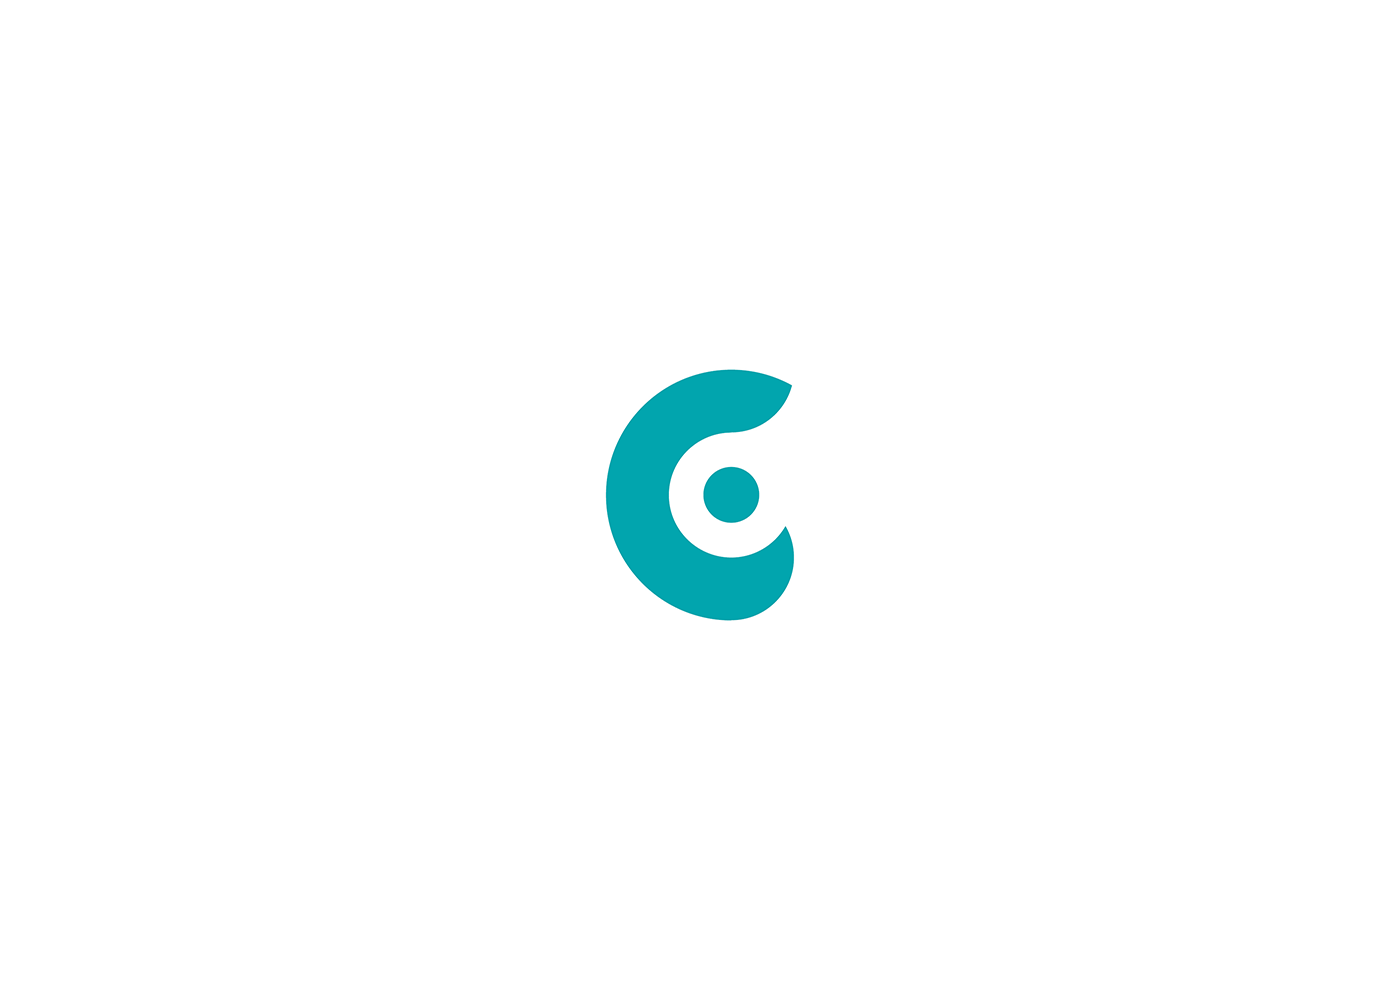 coreon brand identity Project new top company